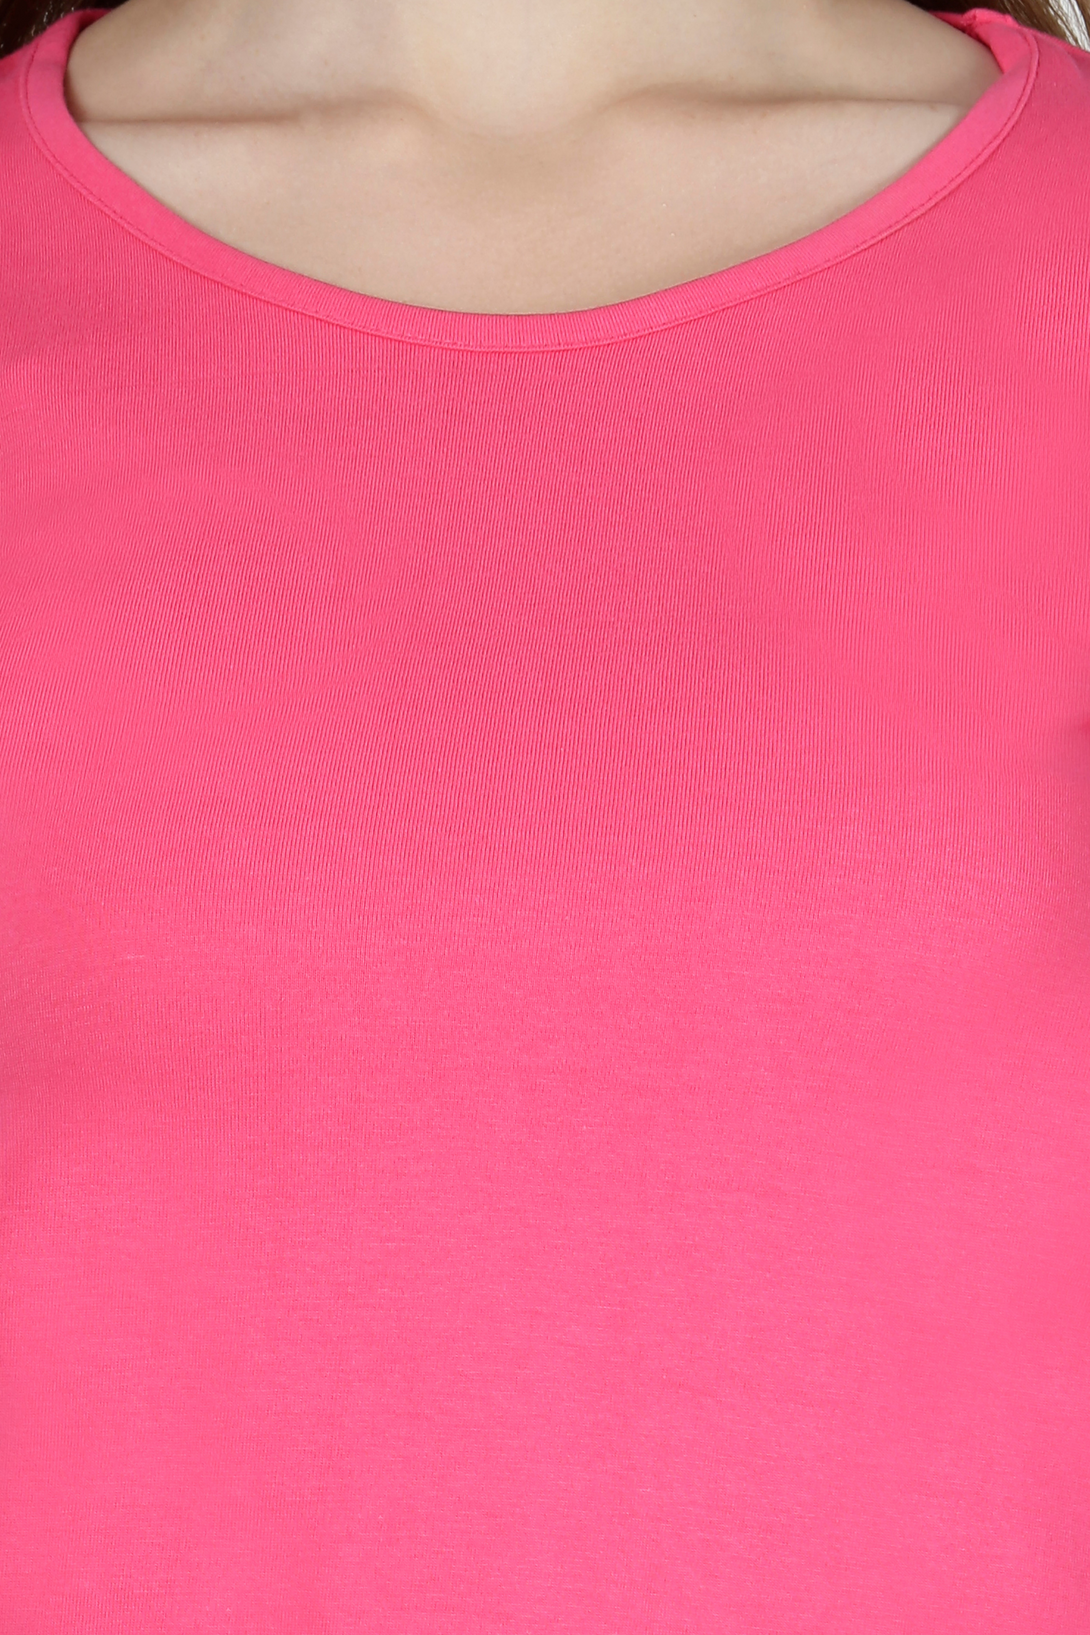 Pink Scoop Neck T-Shirt For Women - WowWaves - 4